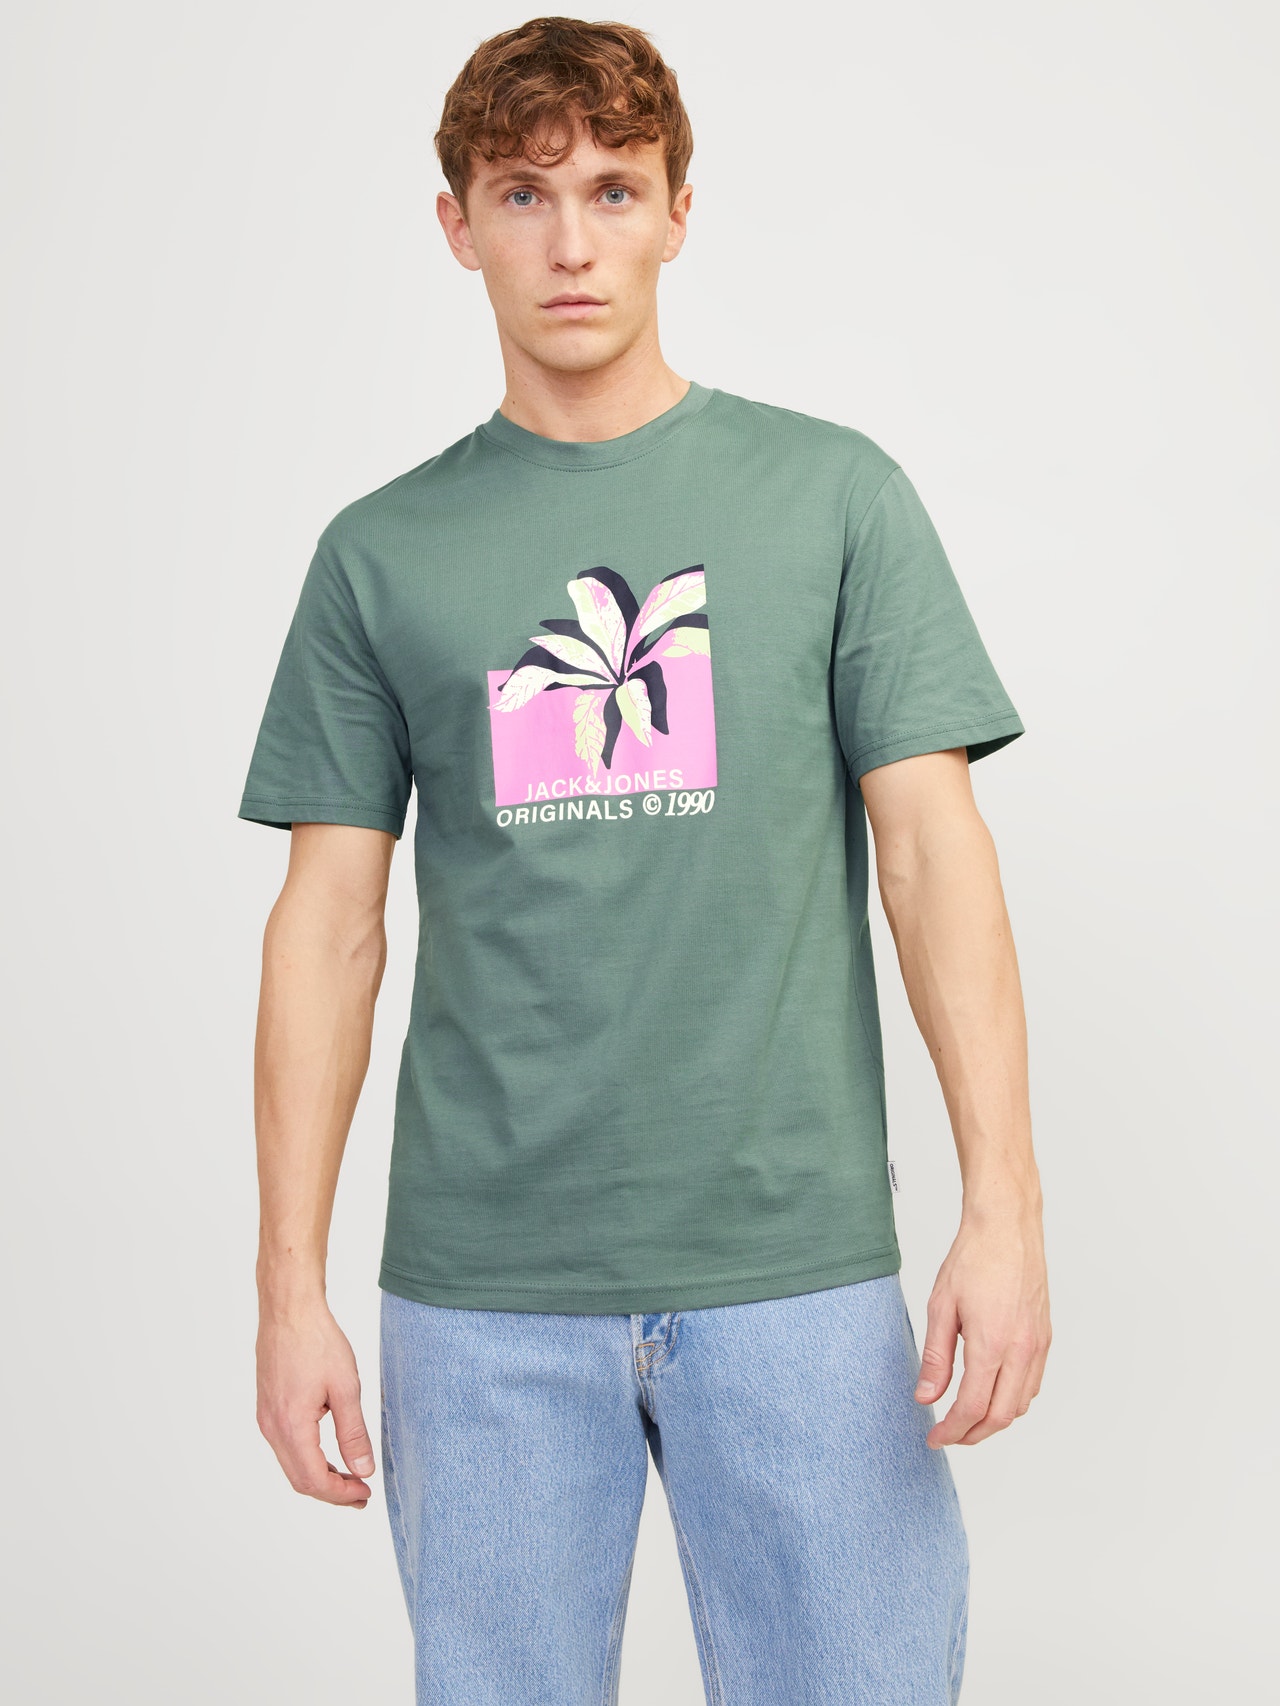 Jack & Jones T-shirt Imprimé Col rond -Laurel Wreath - 12252173